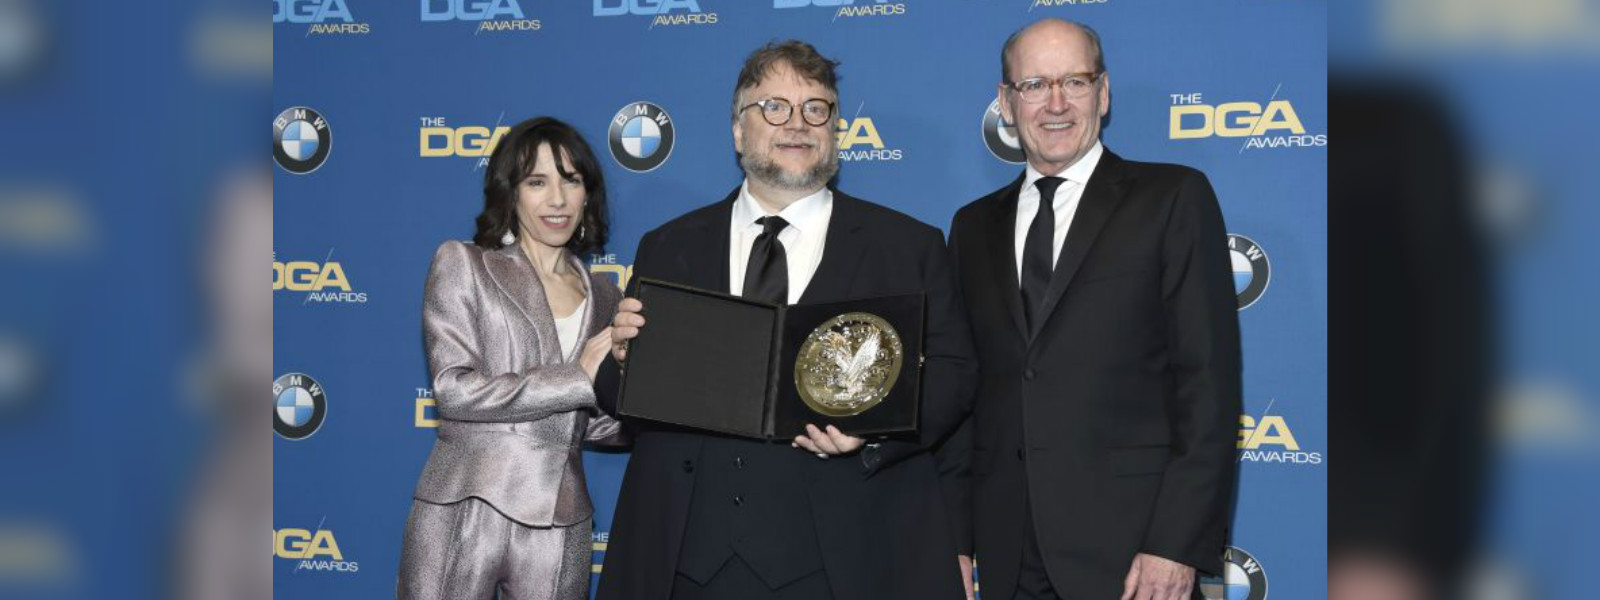 Hollywood directors honored at DGA awards in LA 